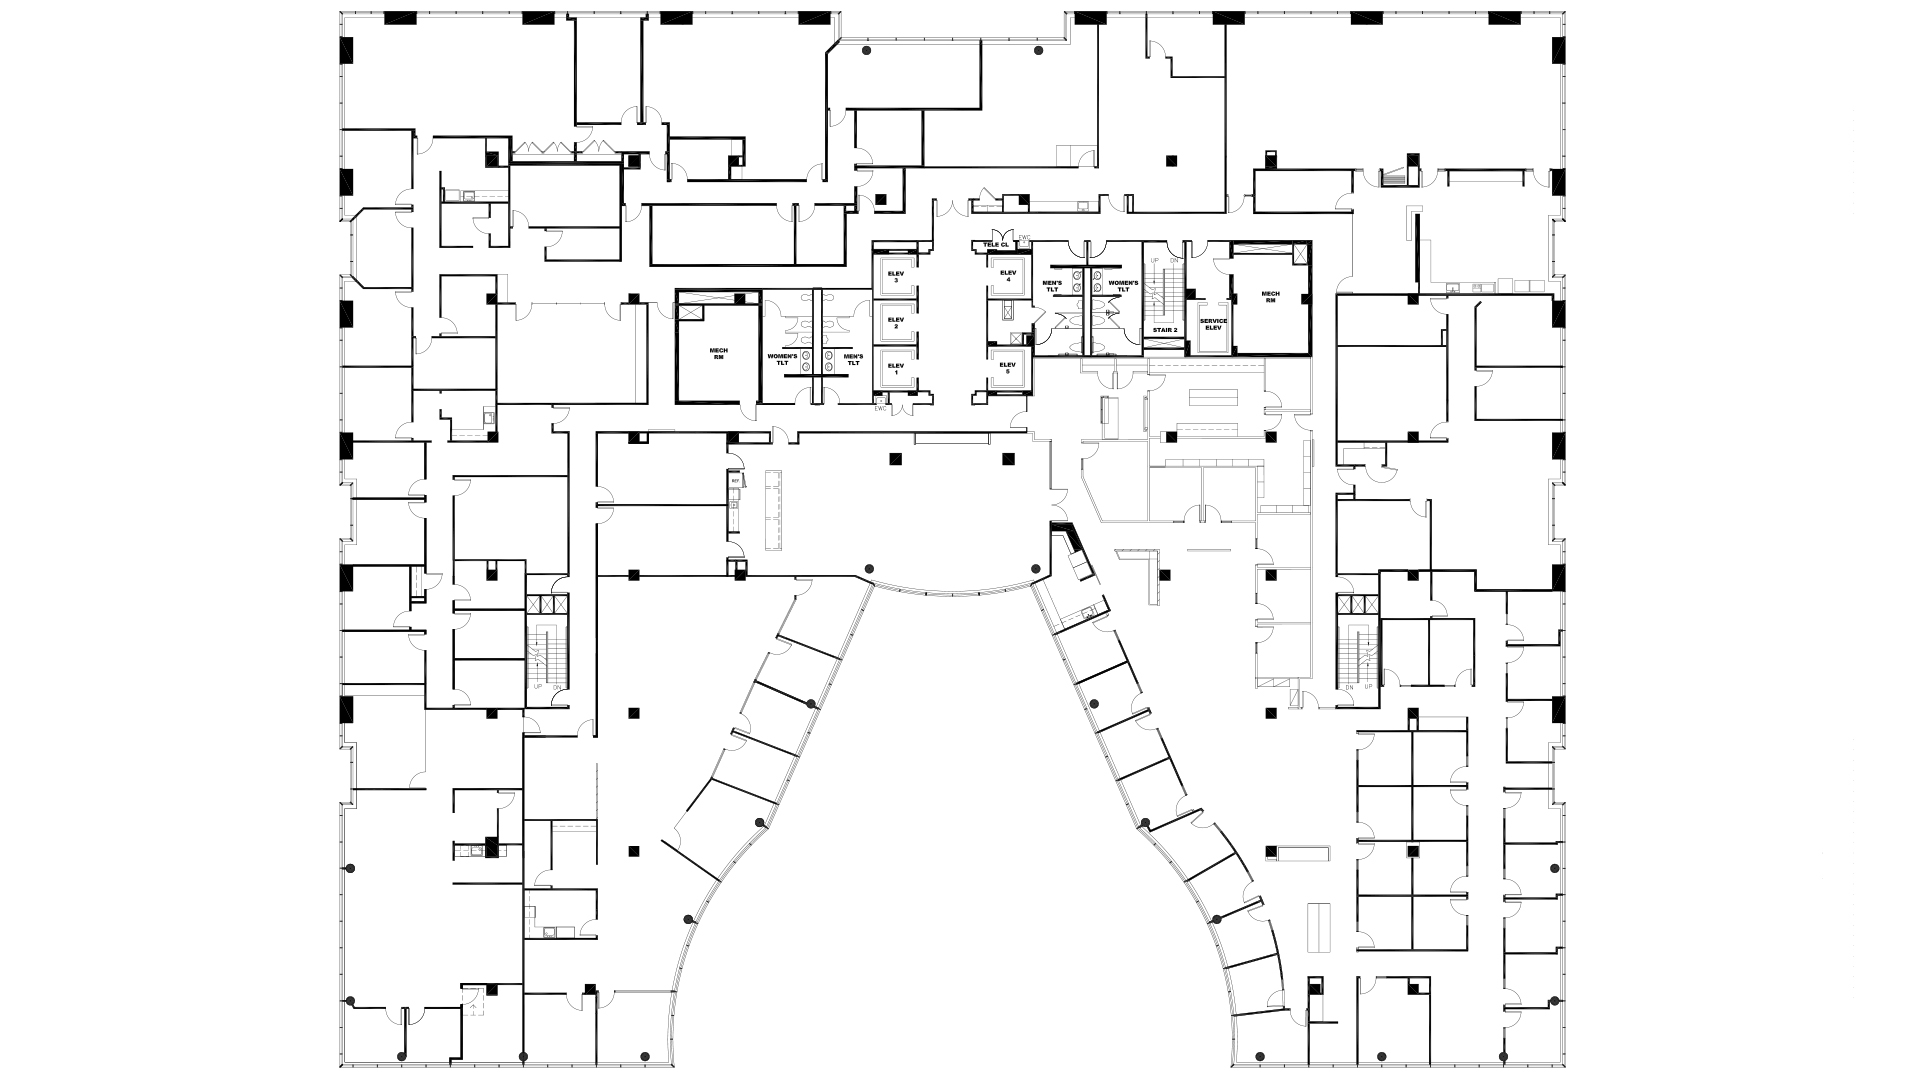 4301 N Fairfax floor plan